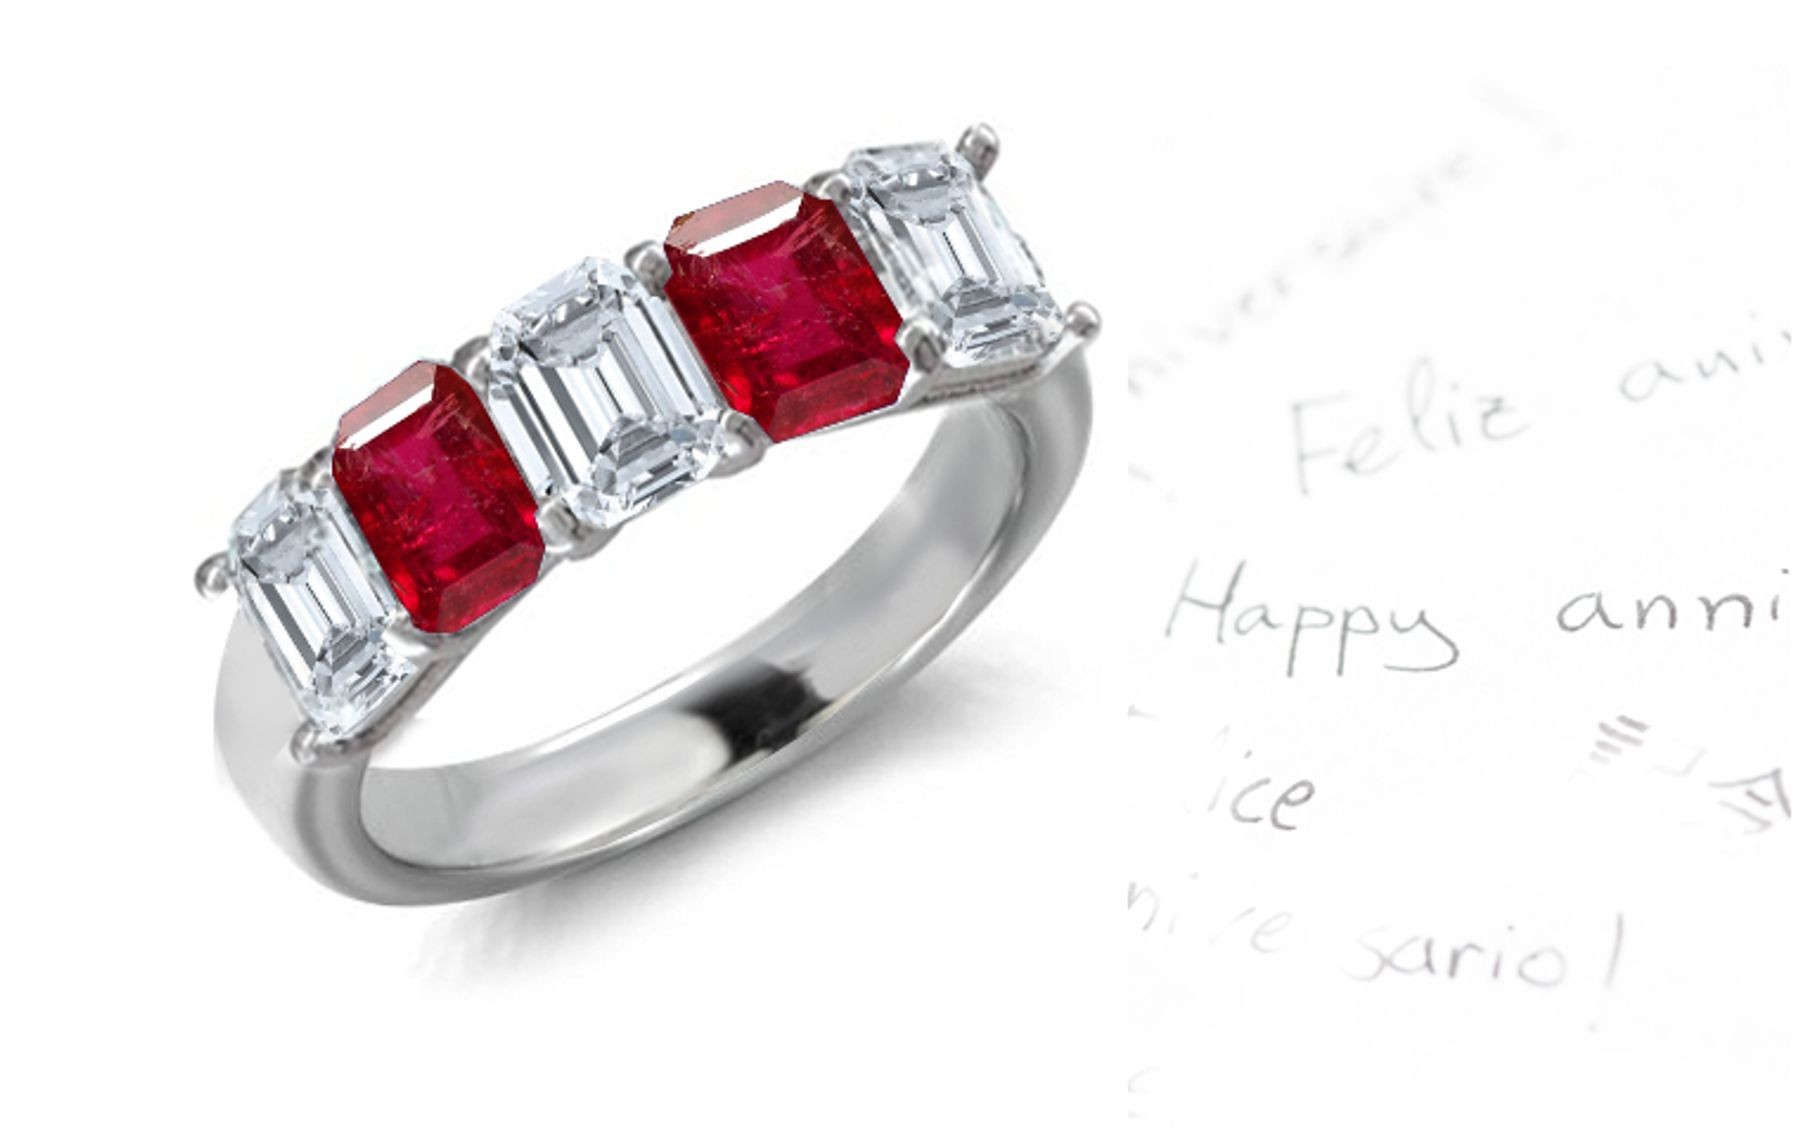 View Ruby Diamond Five Stone Wedding Rings